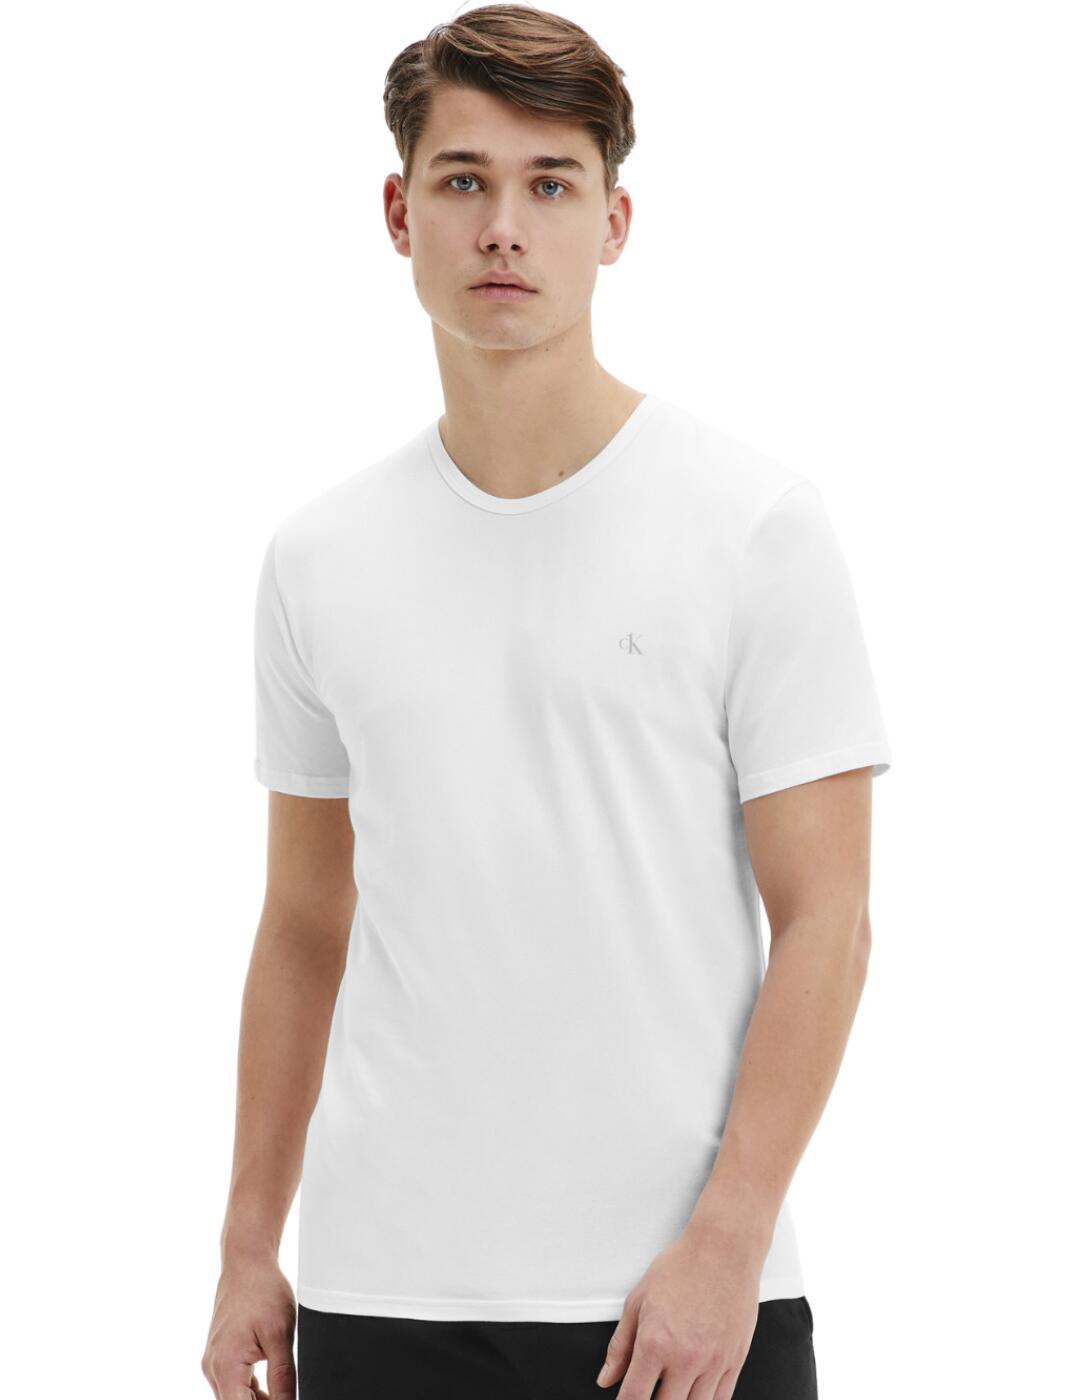 Calvin Klein Mens CK One Crew Neck T-Shirts 2 Pack White